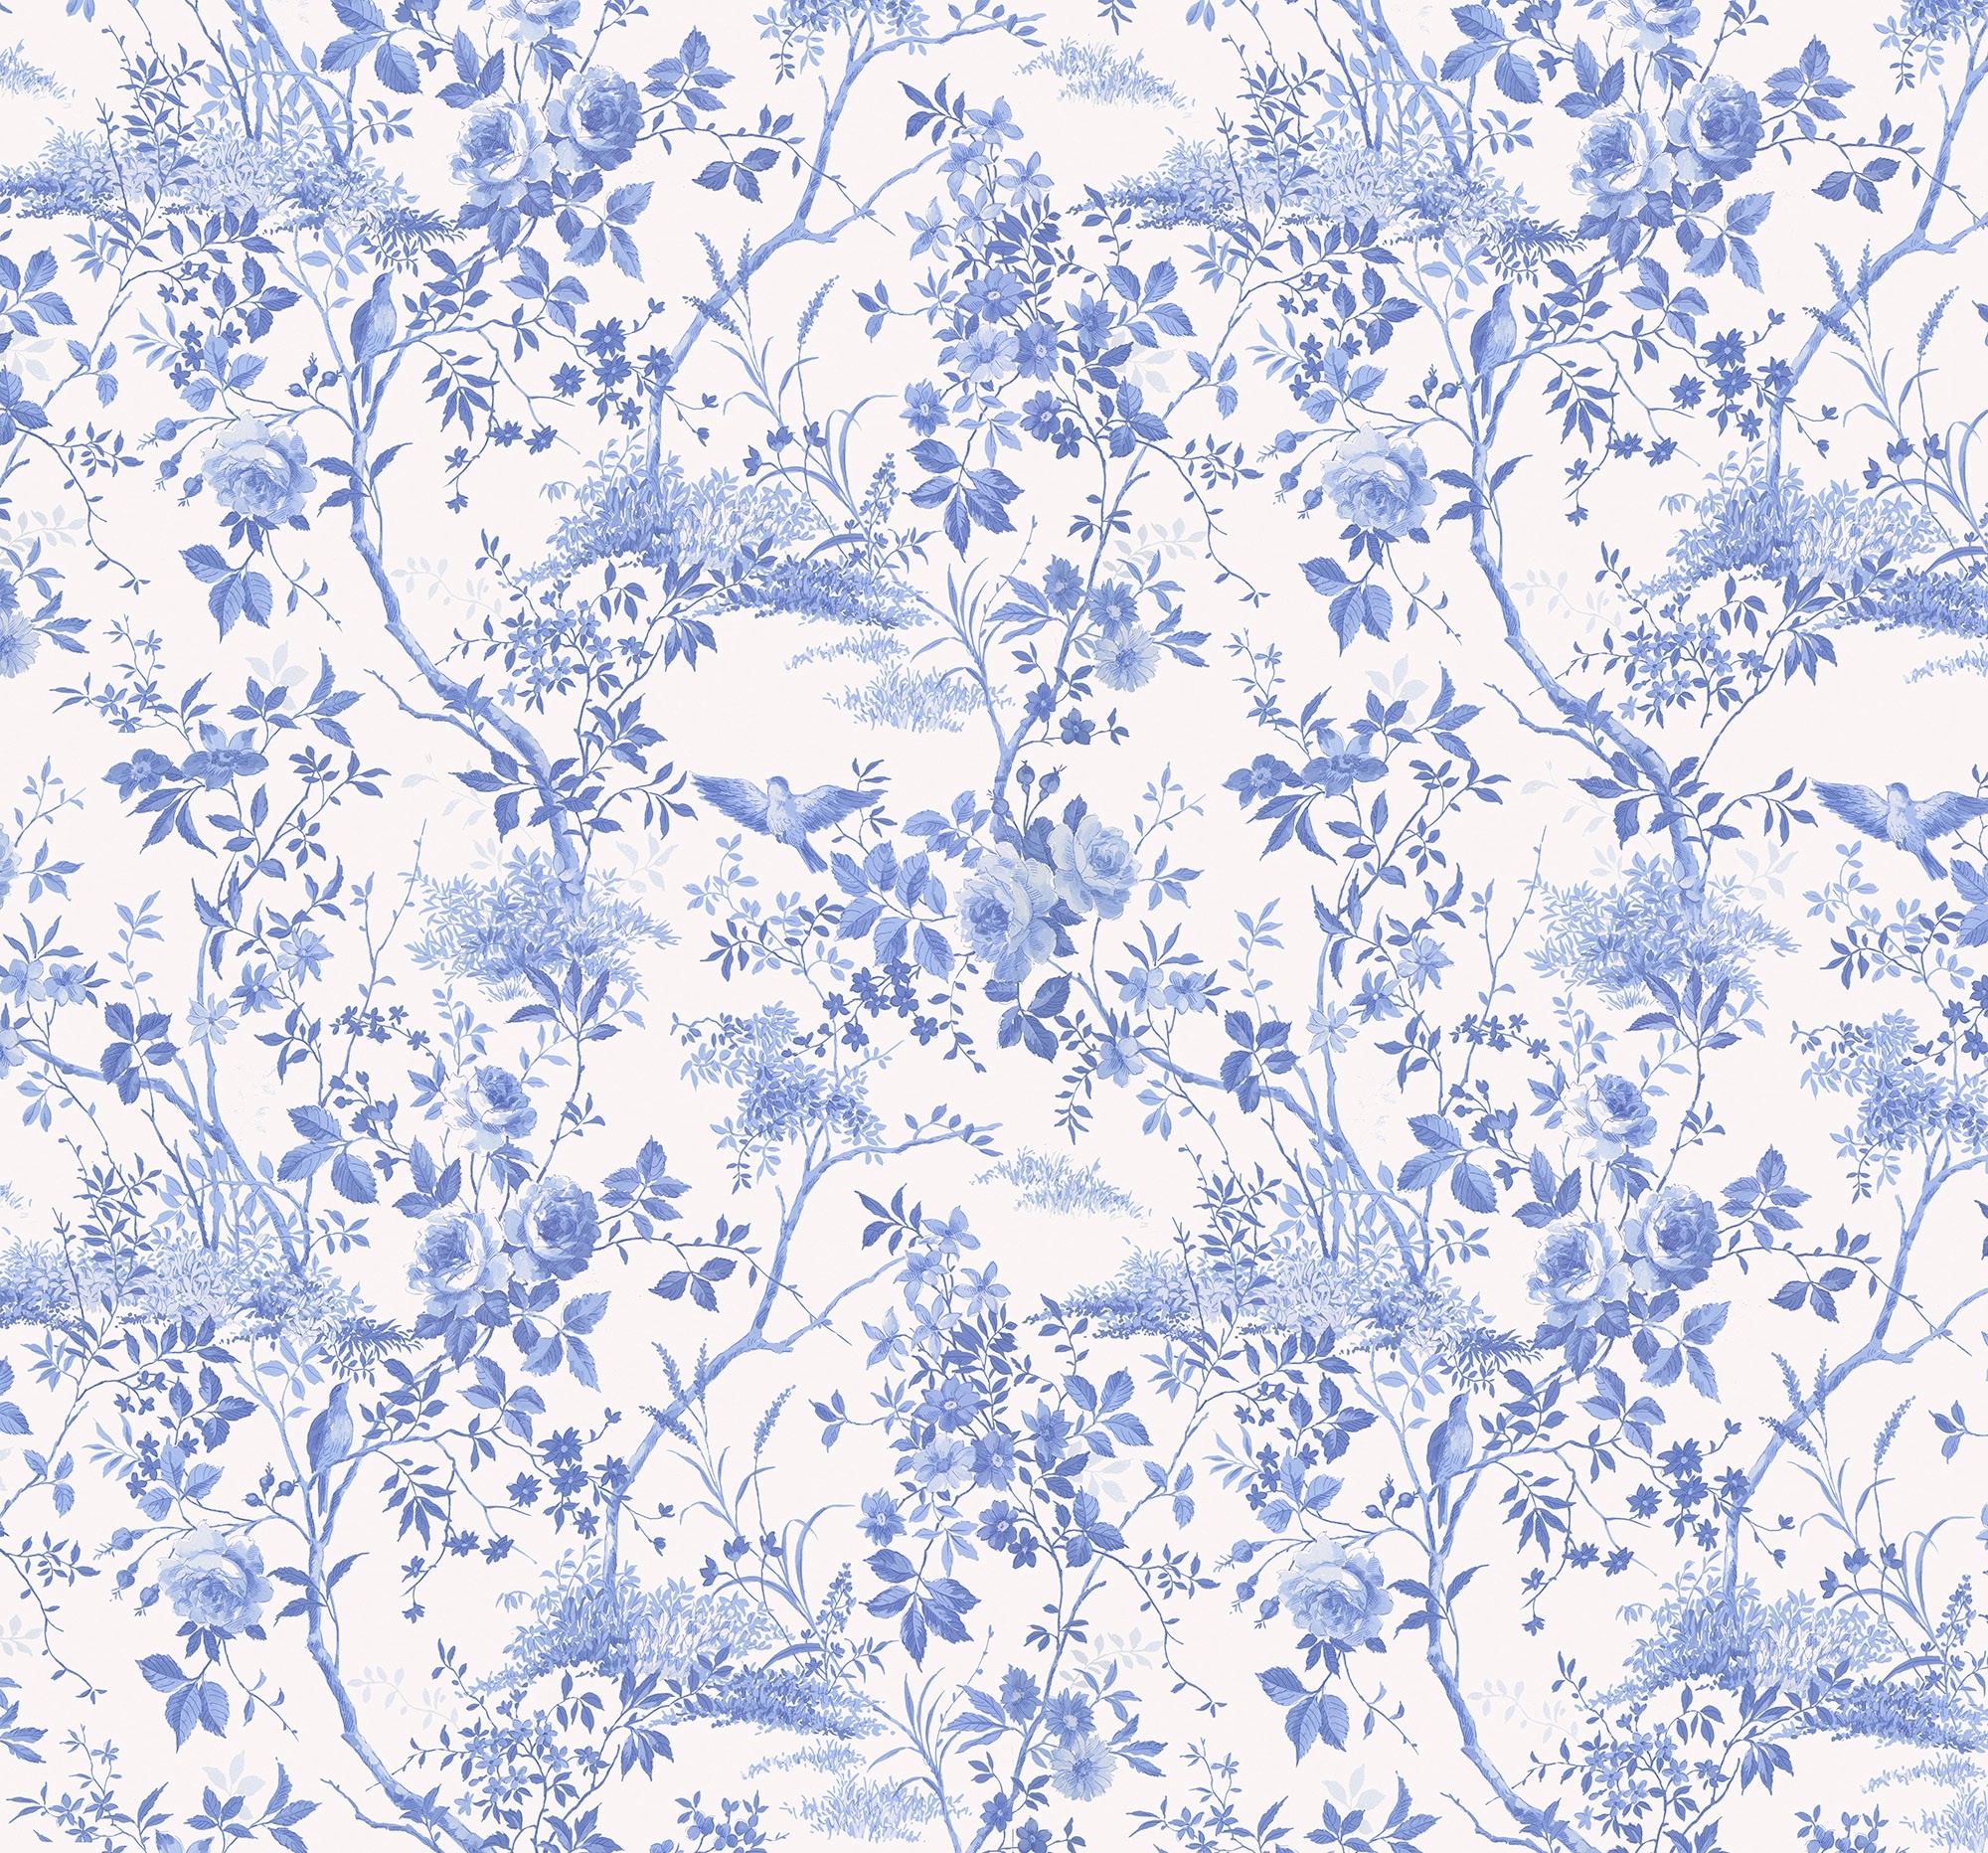 KOMAR Vliestapete "Charming Bloom" Tapeten Gr. B/L: 300 m x 280 m, Rollen: 1 St., blau (blau, weiß) Blumentapeten